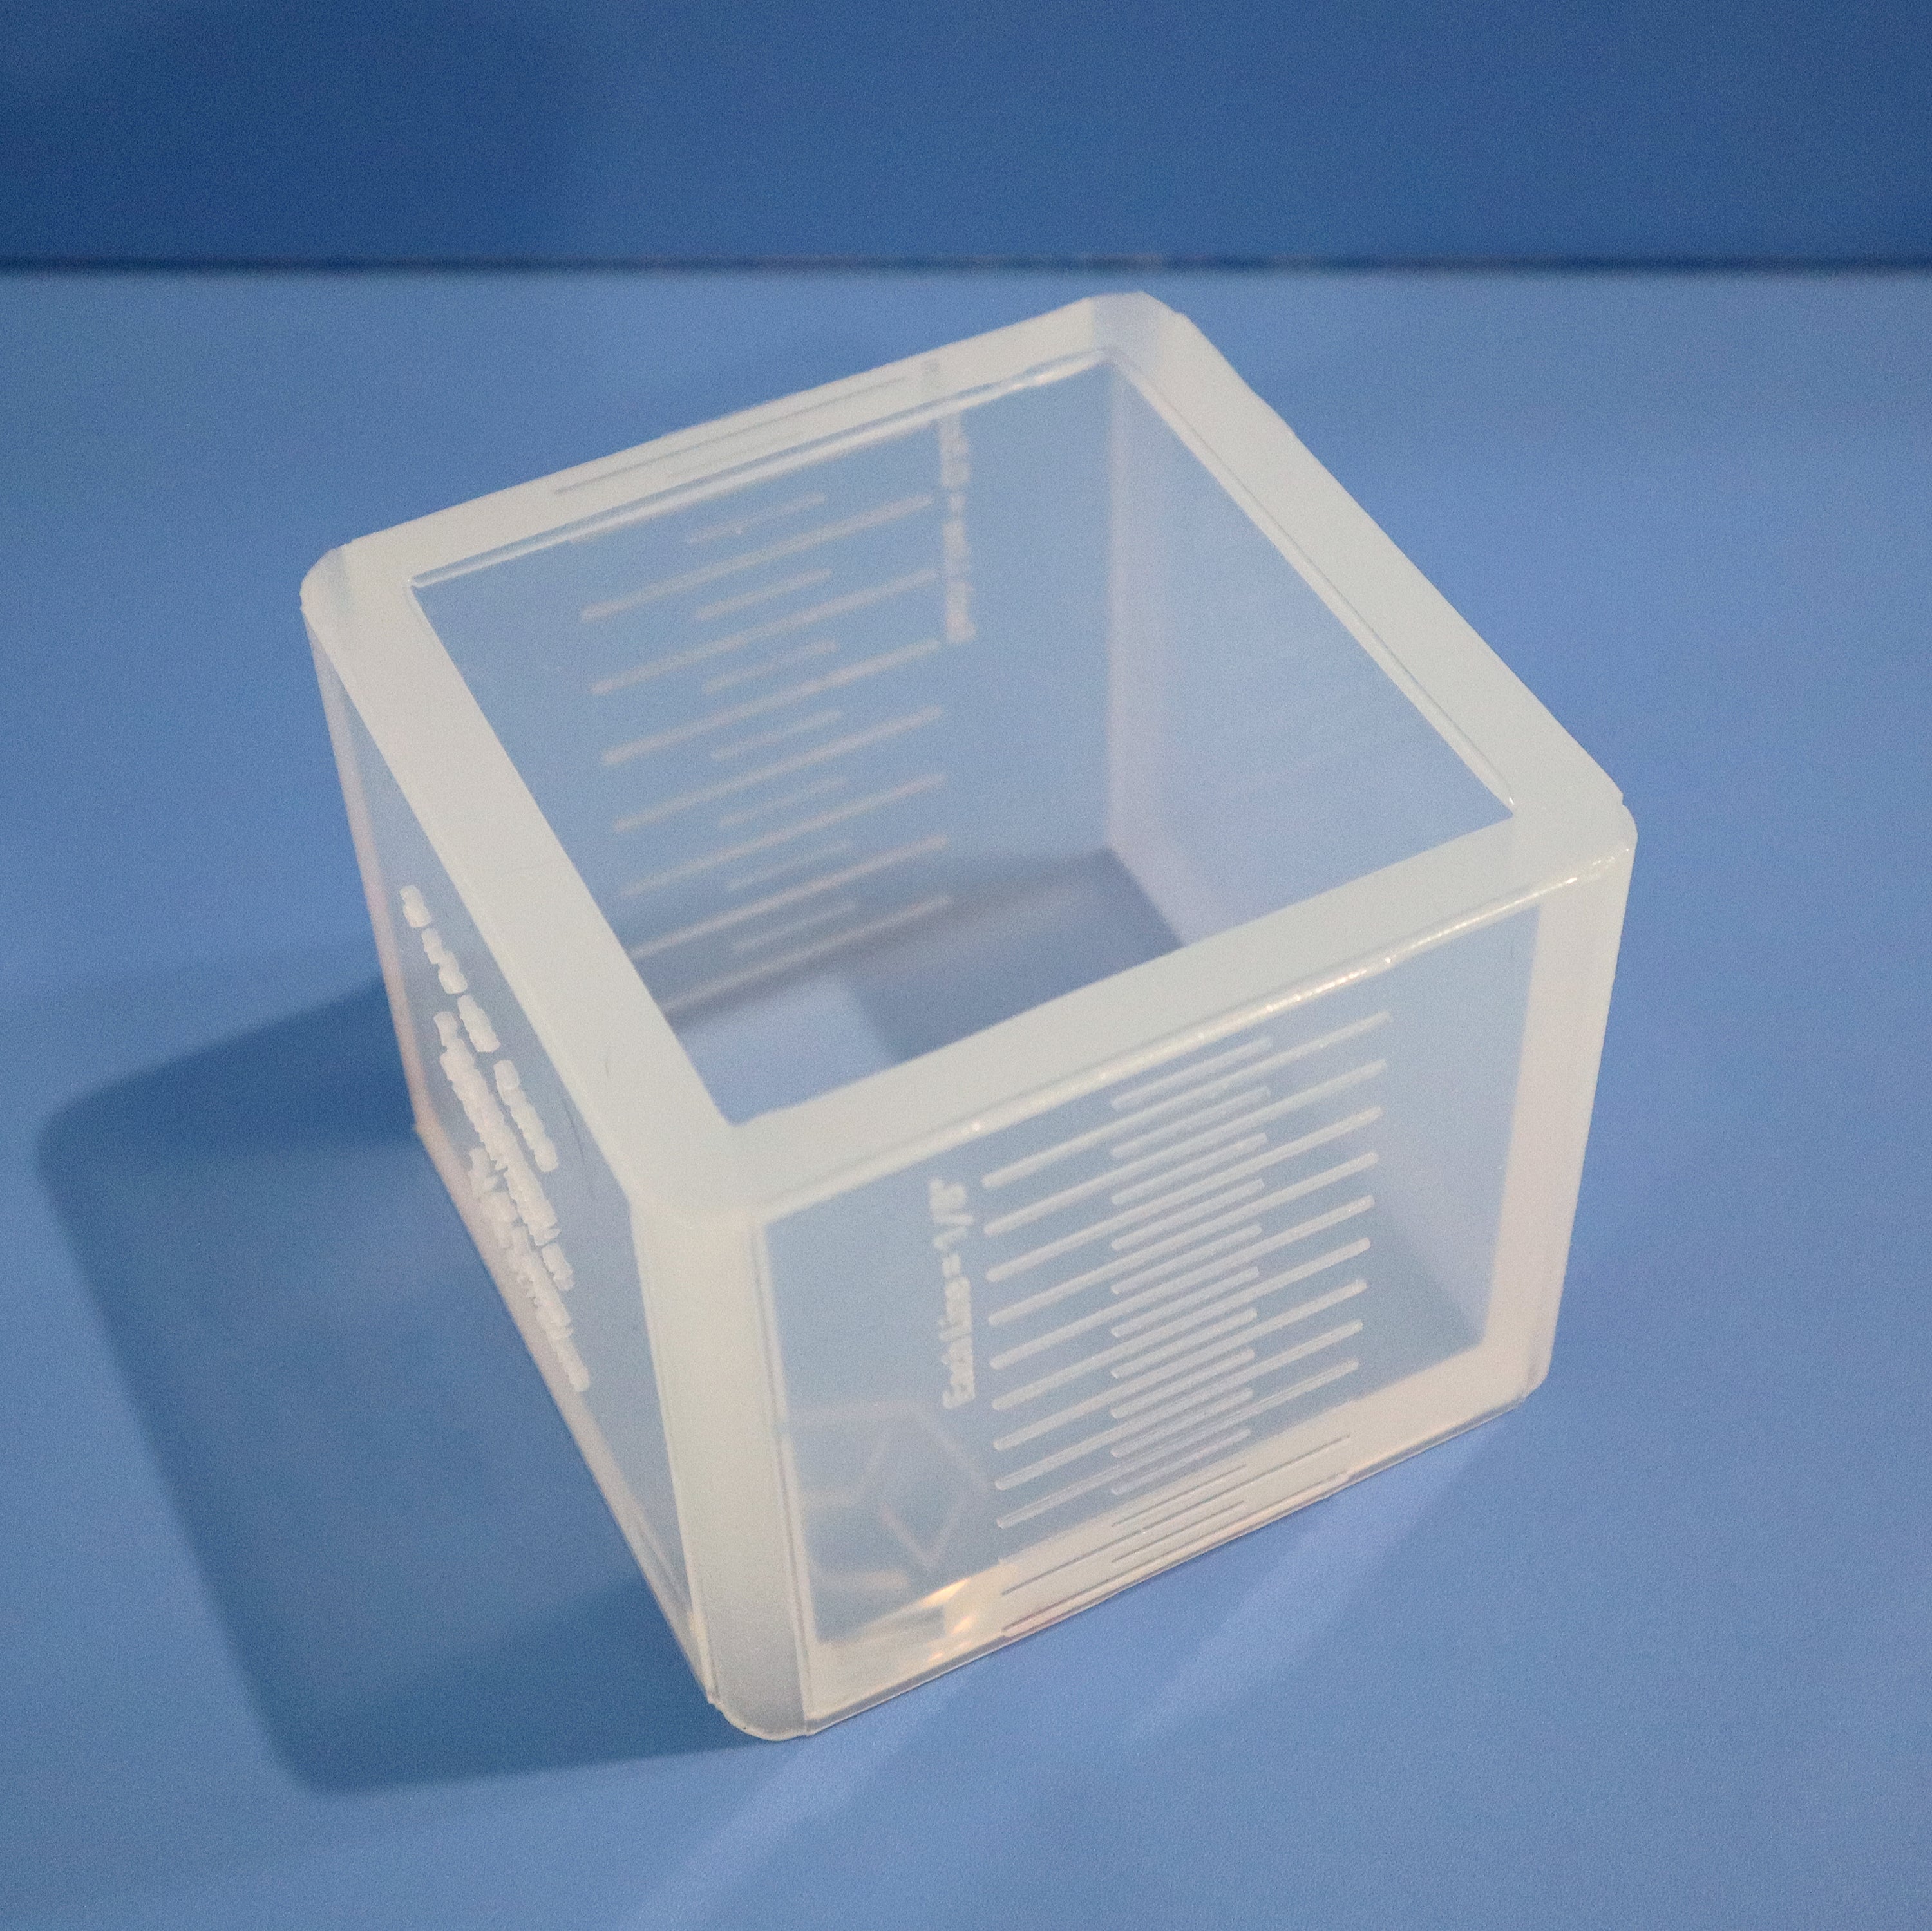 3"x3"x3" Silicone Cube Mold